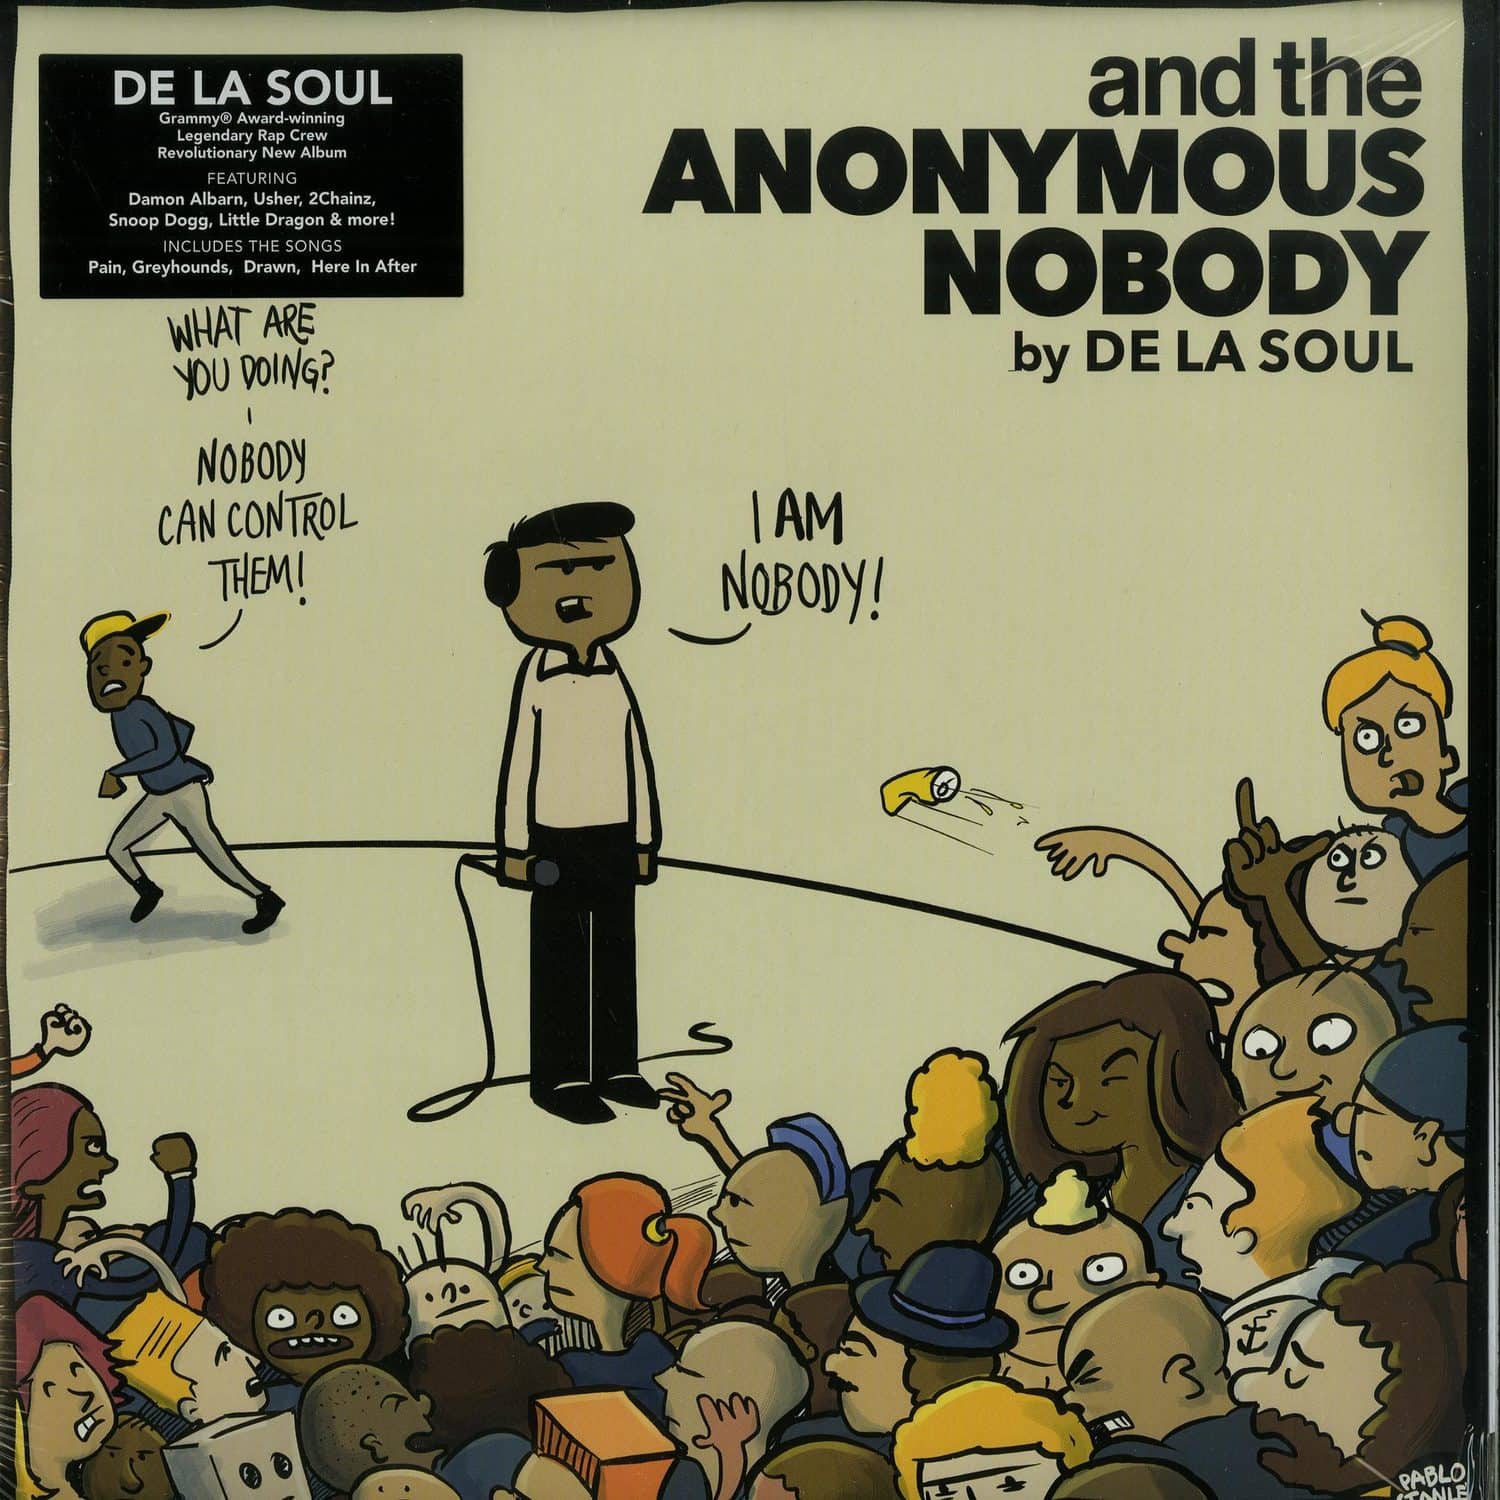 De La Soul - AND THE ANONYMOUS NOBODY 